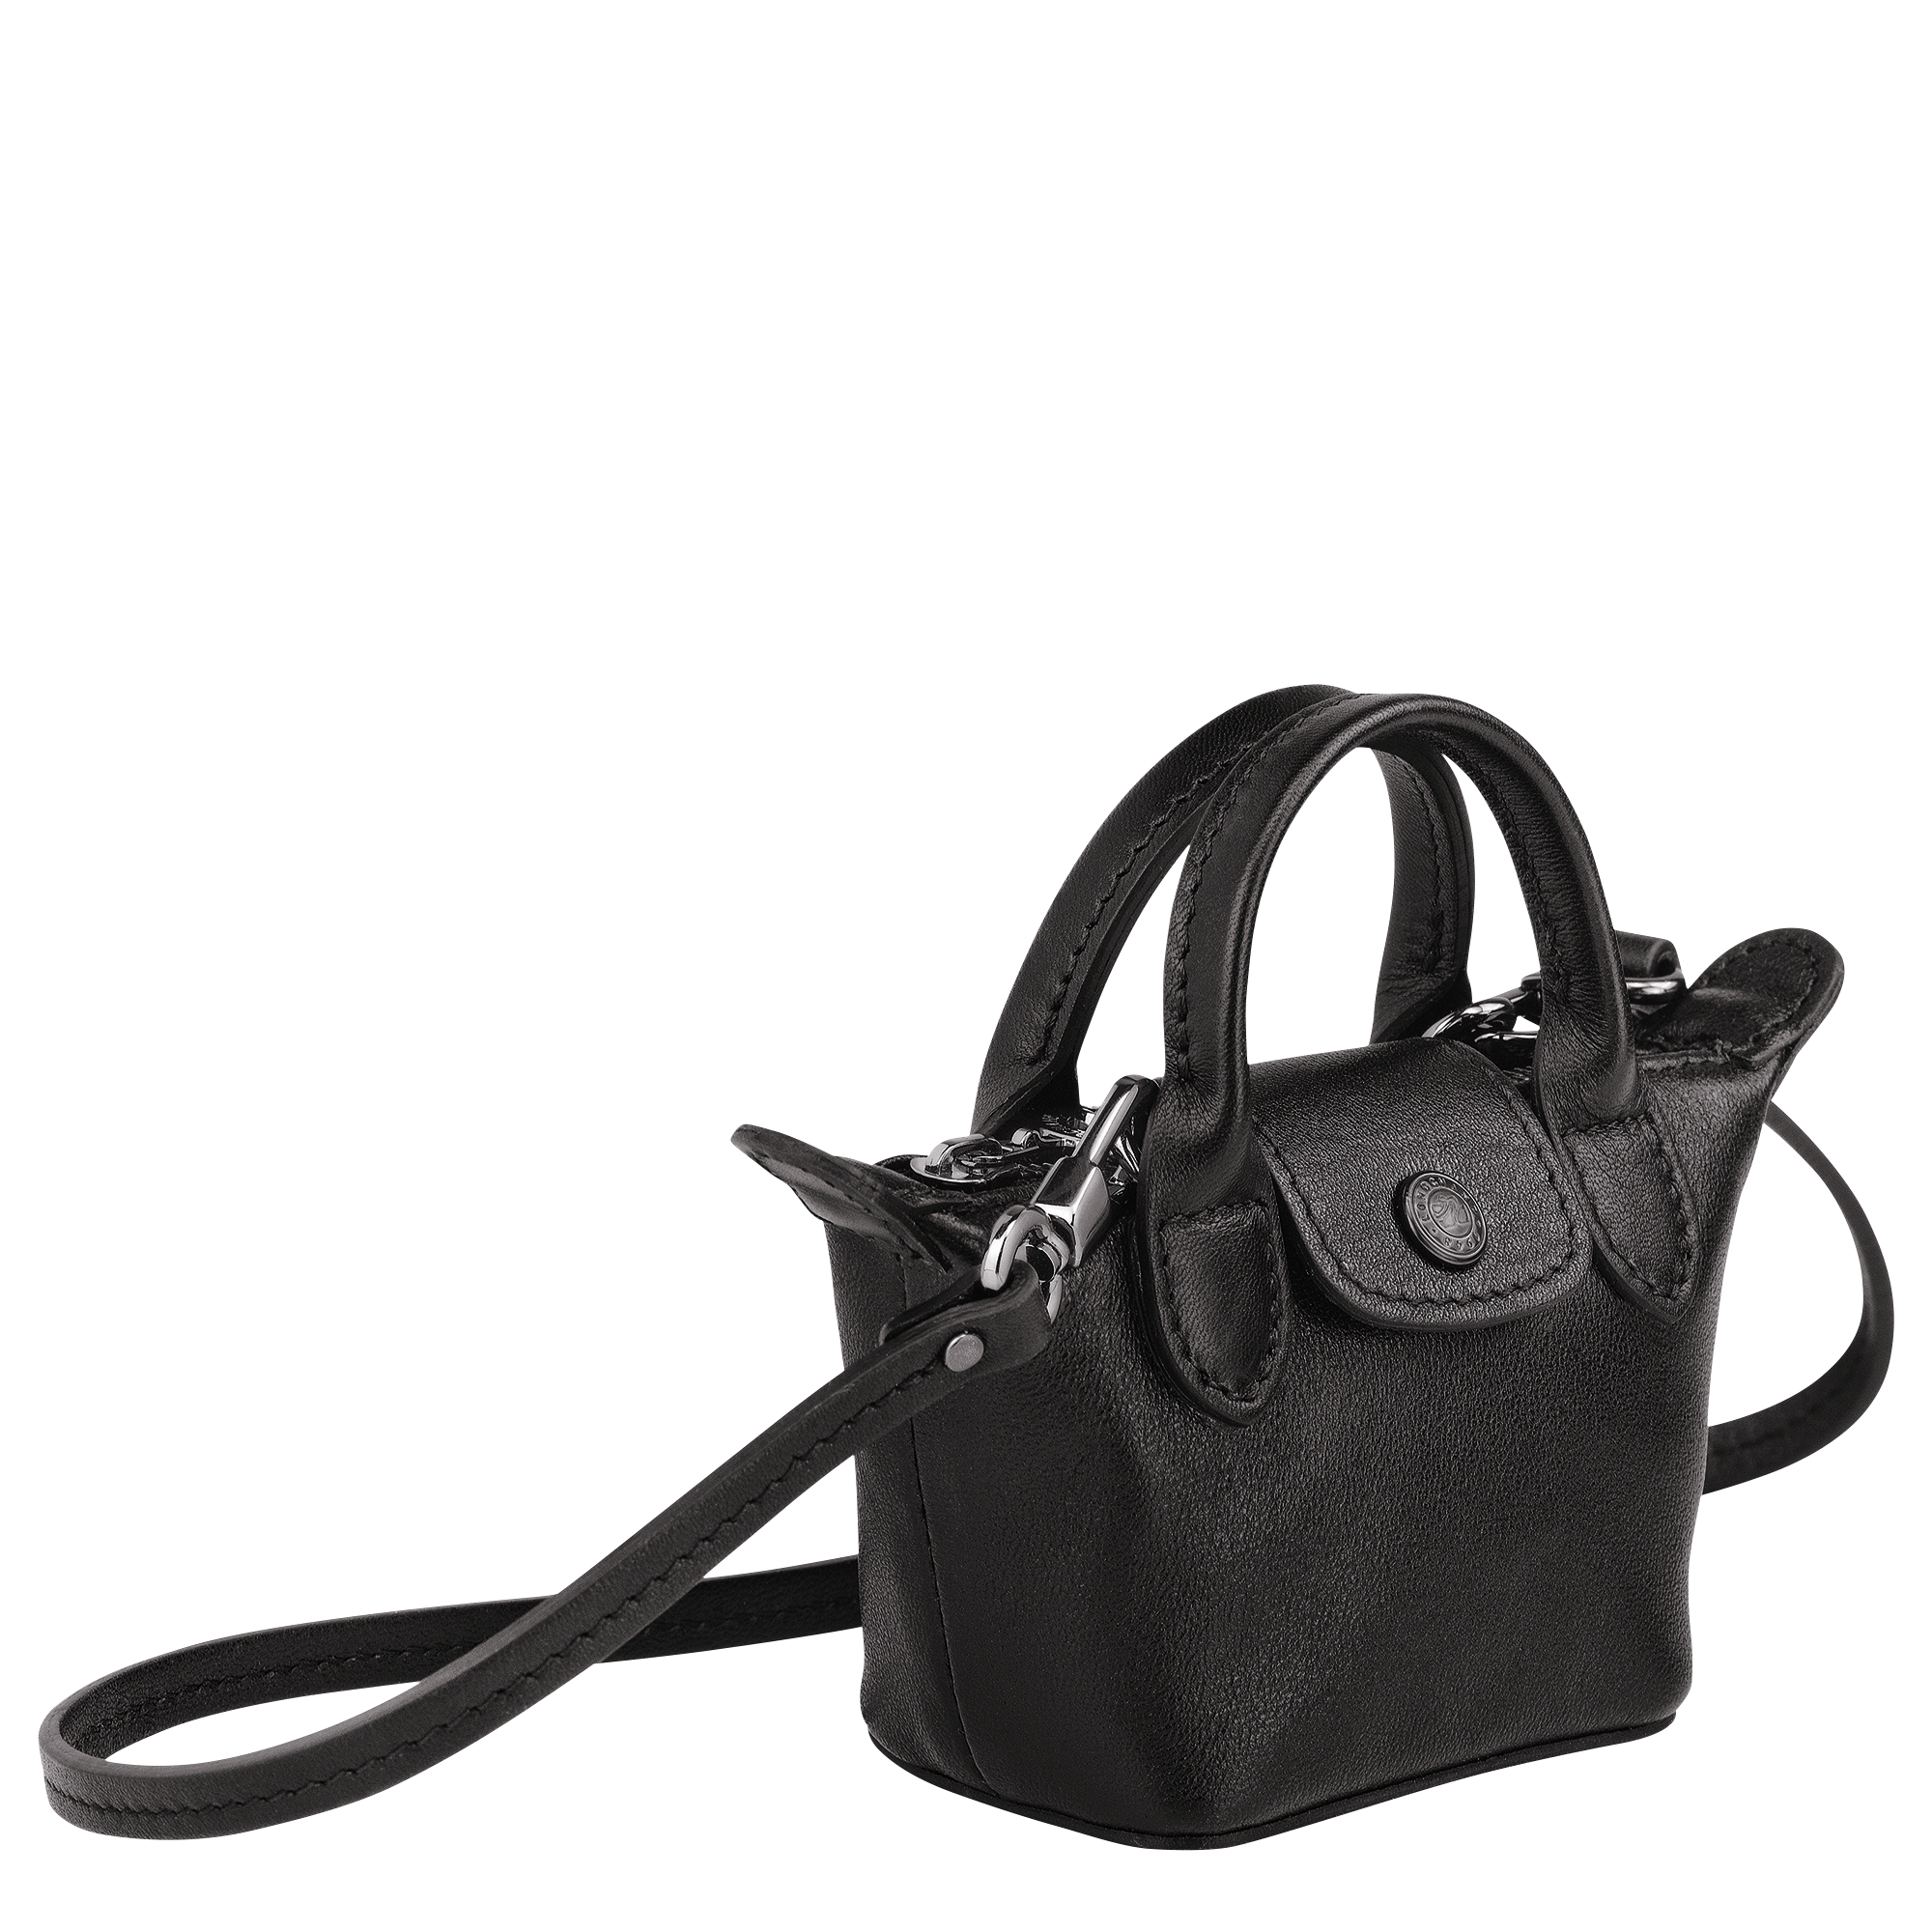 longchamp black leather bag